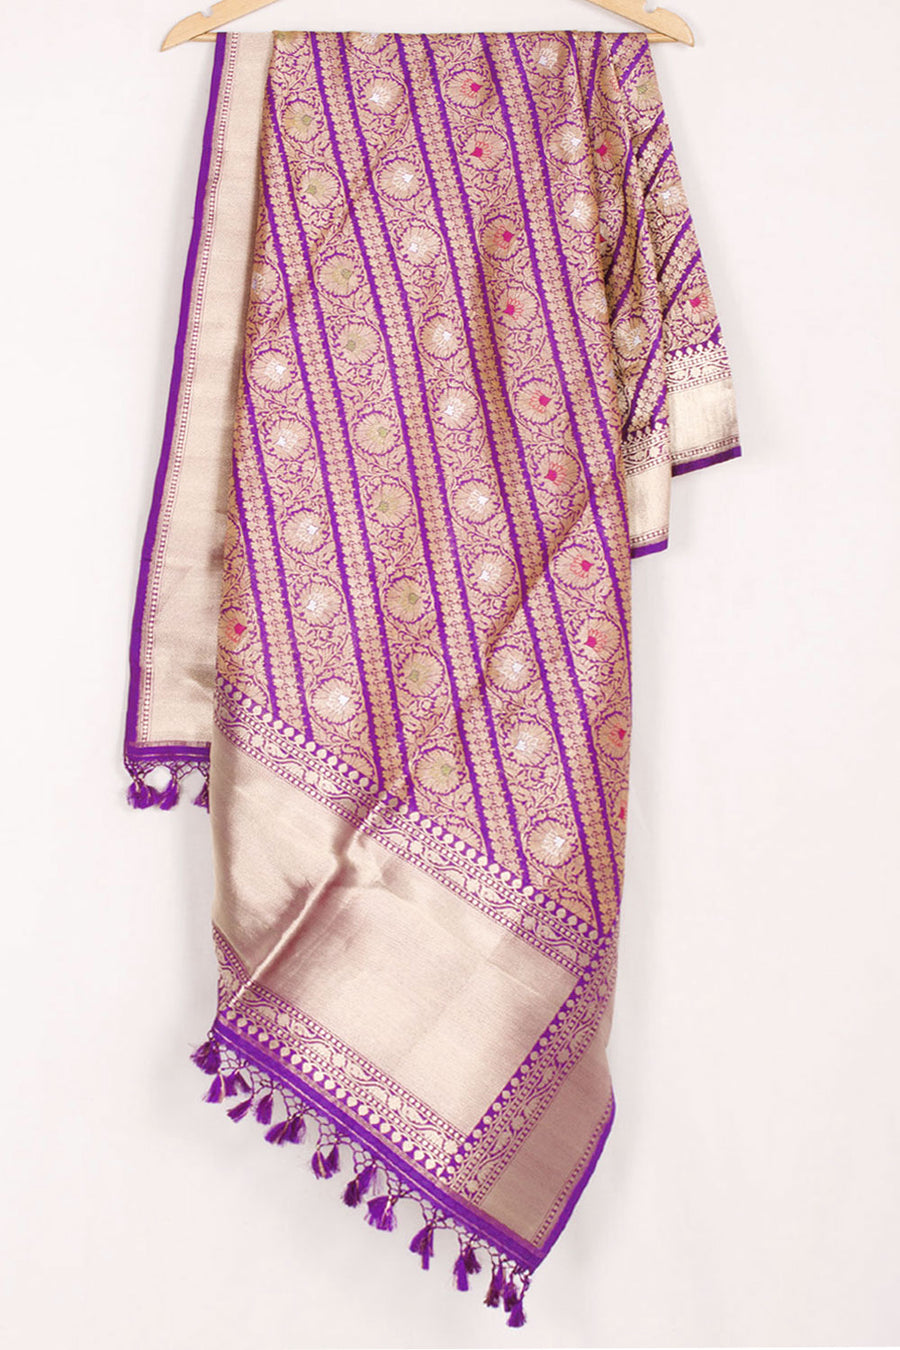 Handloom Banarasi Brocade Silk Dupatta with Zari Border and Floral Design